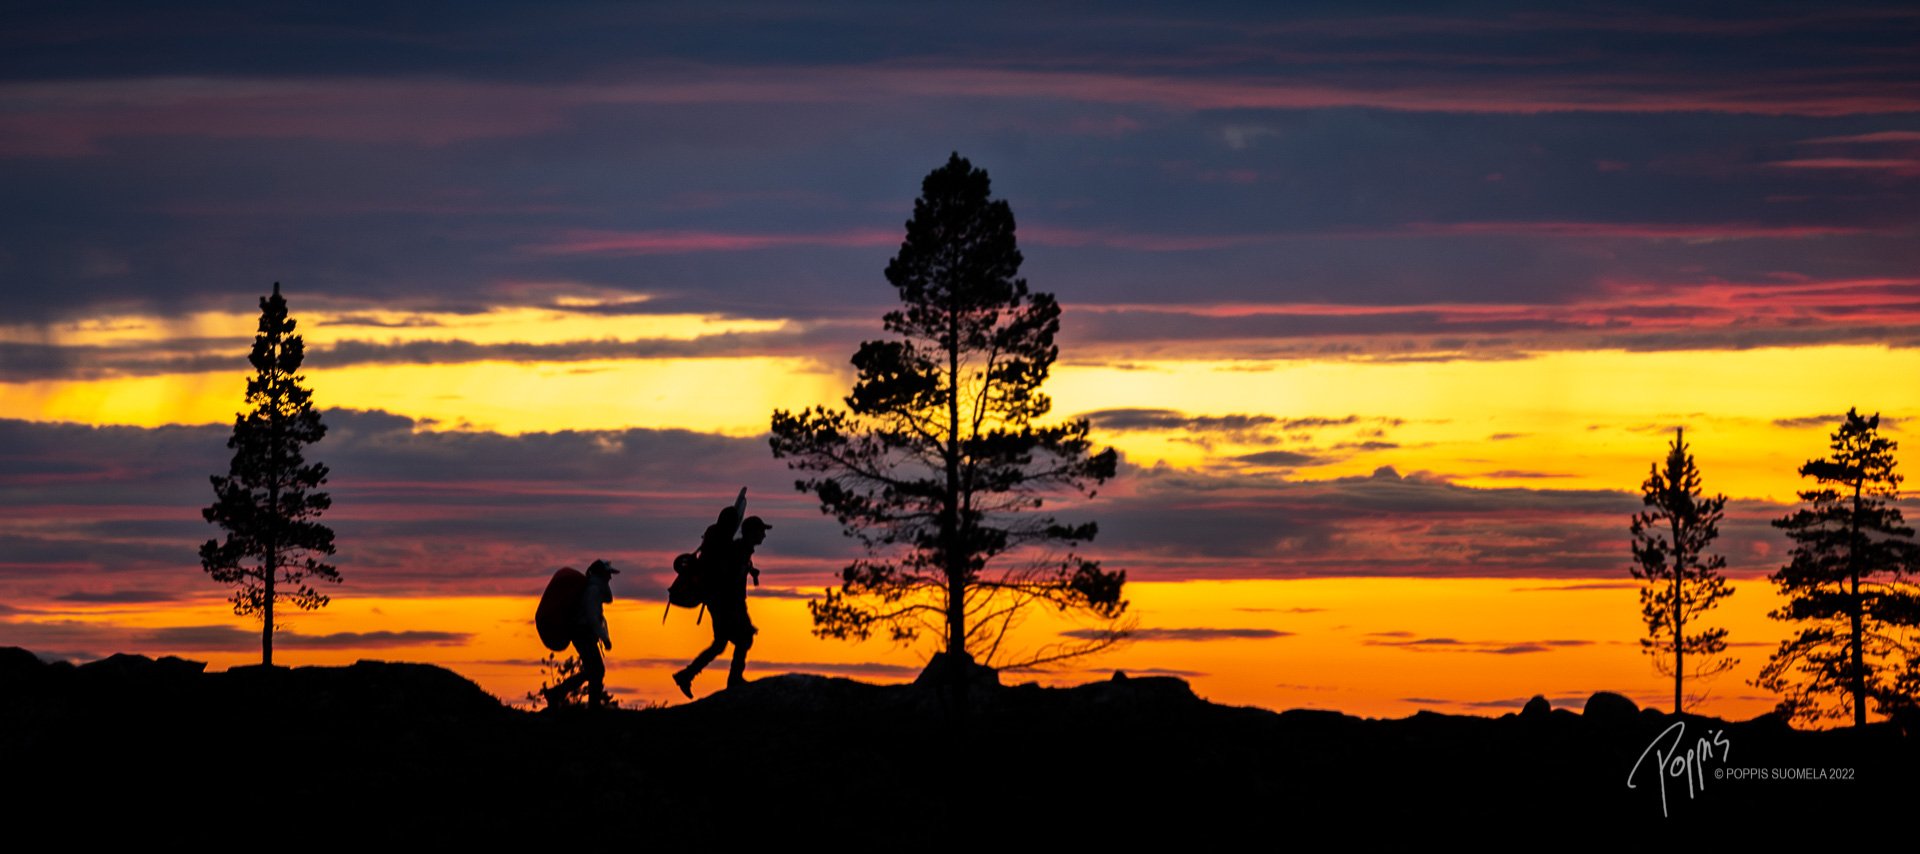 Team Sevetti Hillclimb hiking to the sunset